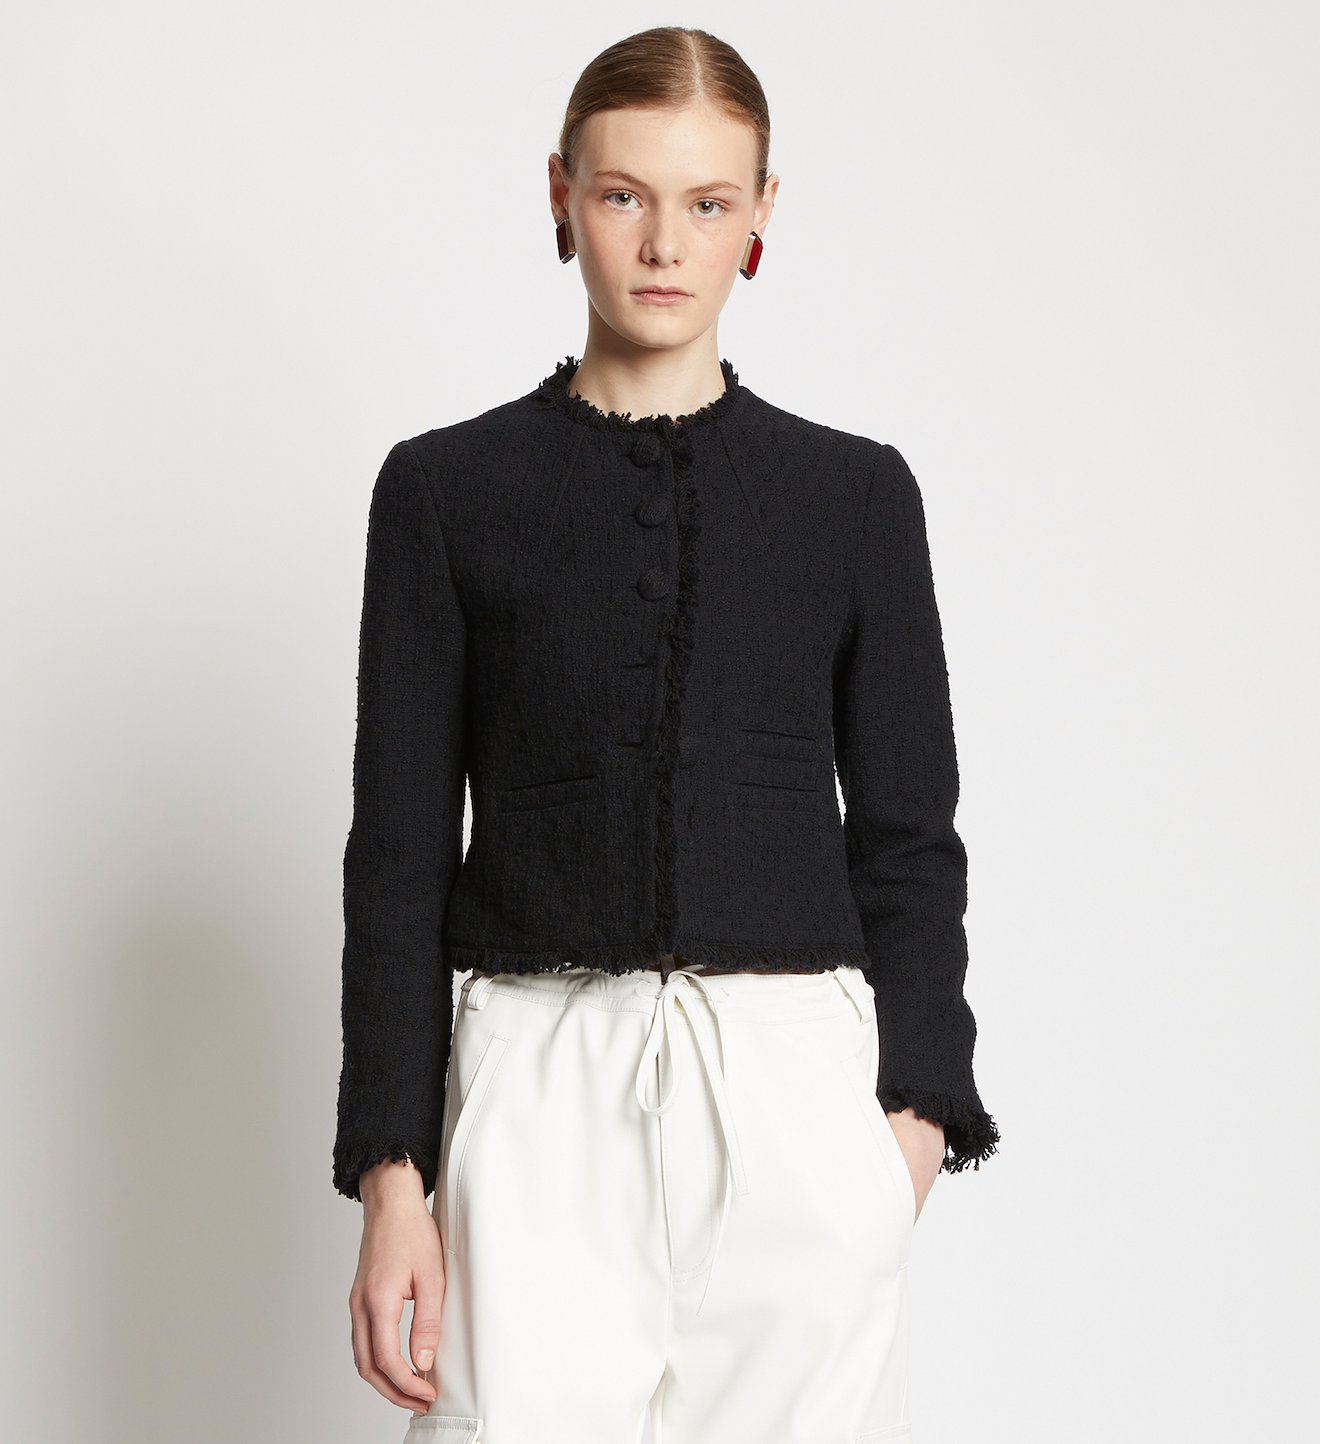 Cropped Tweed Jacket in black | Proenza Schouler